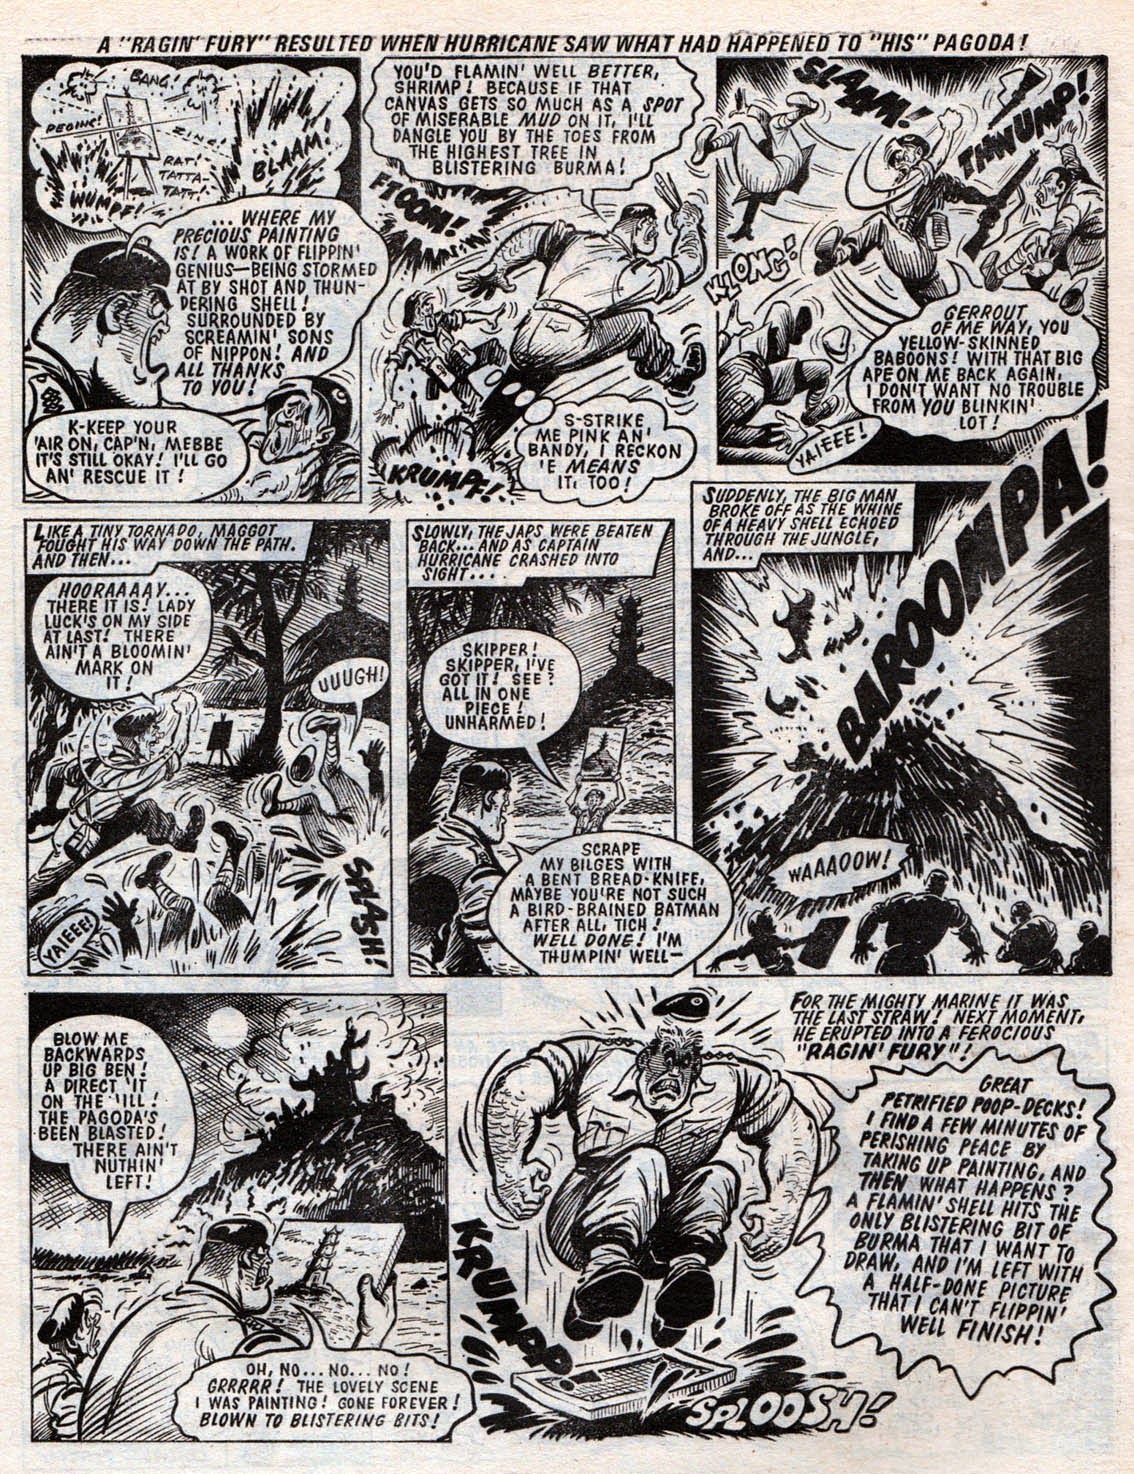 BLIMEY! The Blog of British Comics: Captain Hurricane arrives!